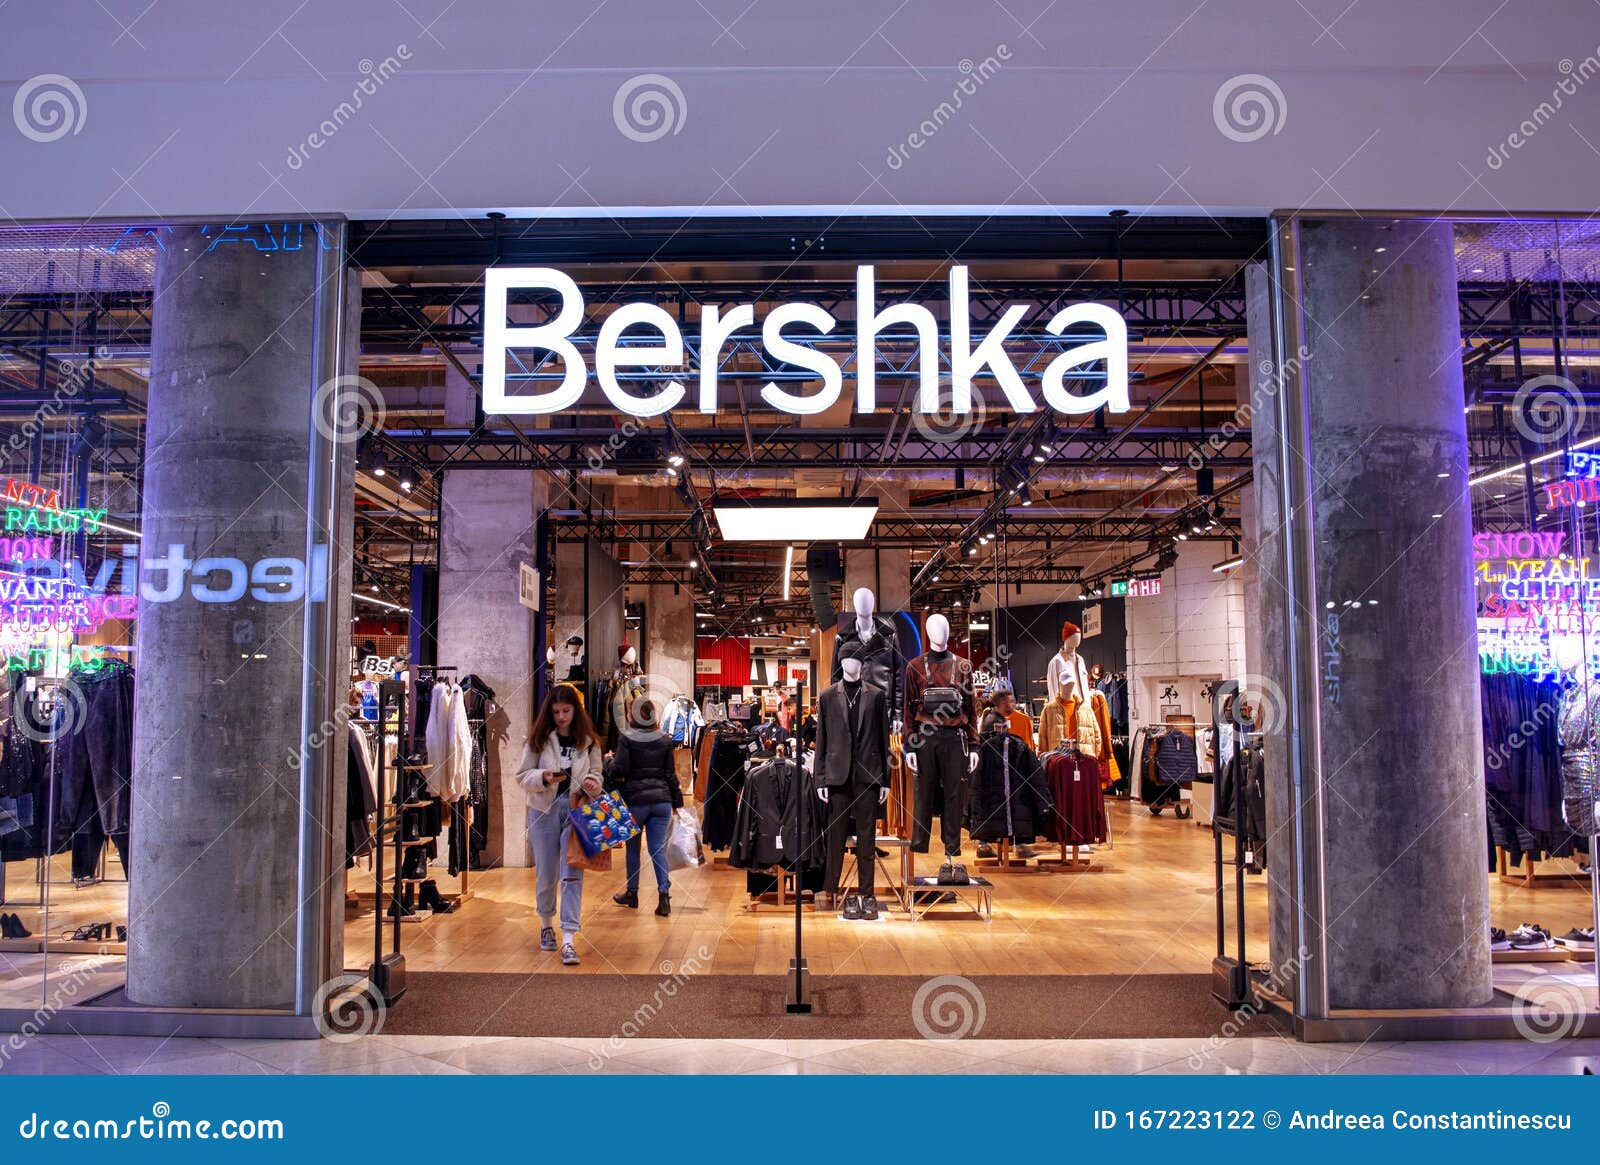 Bershka editorial. Imagen adentro - 167223122